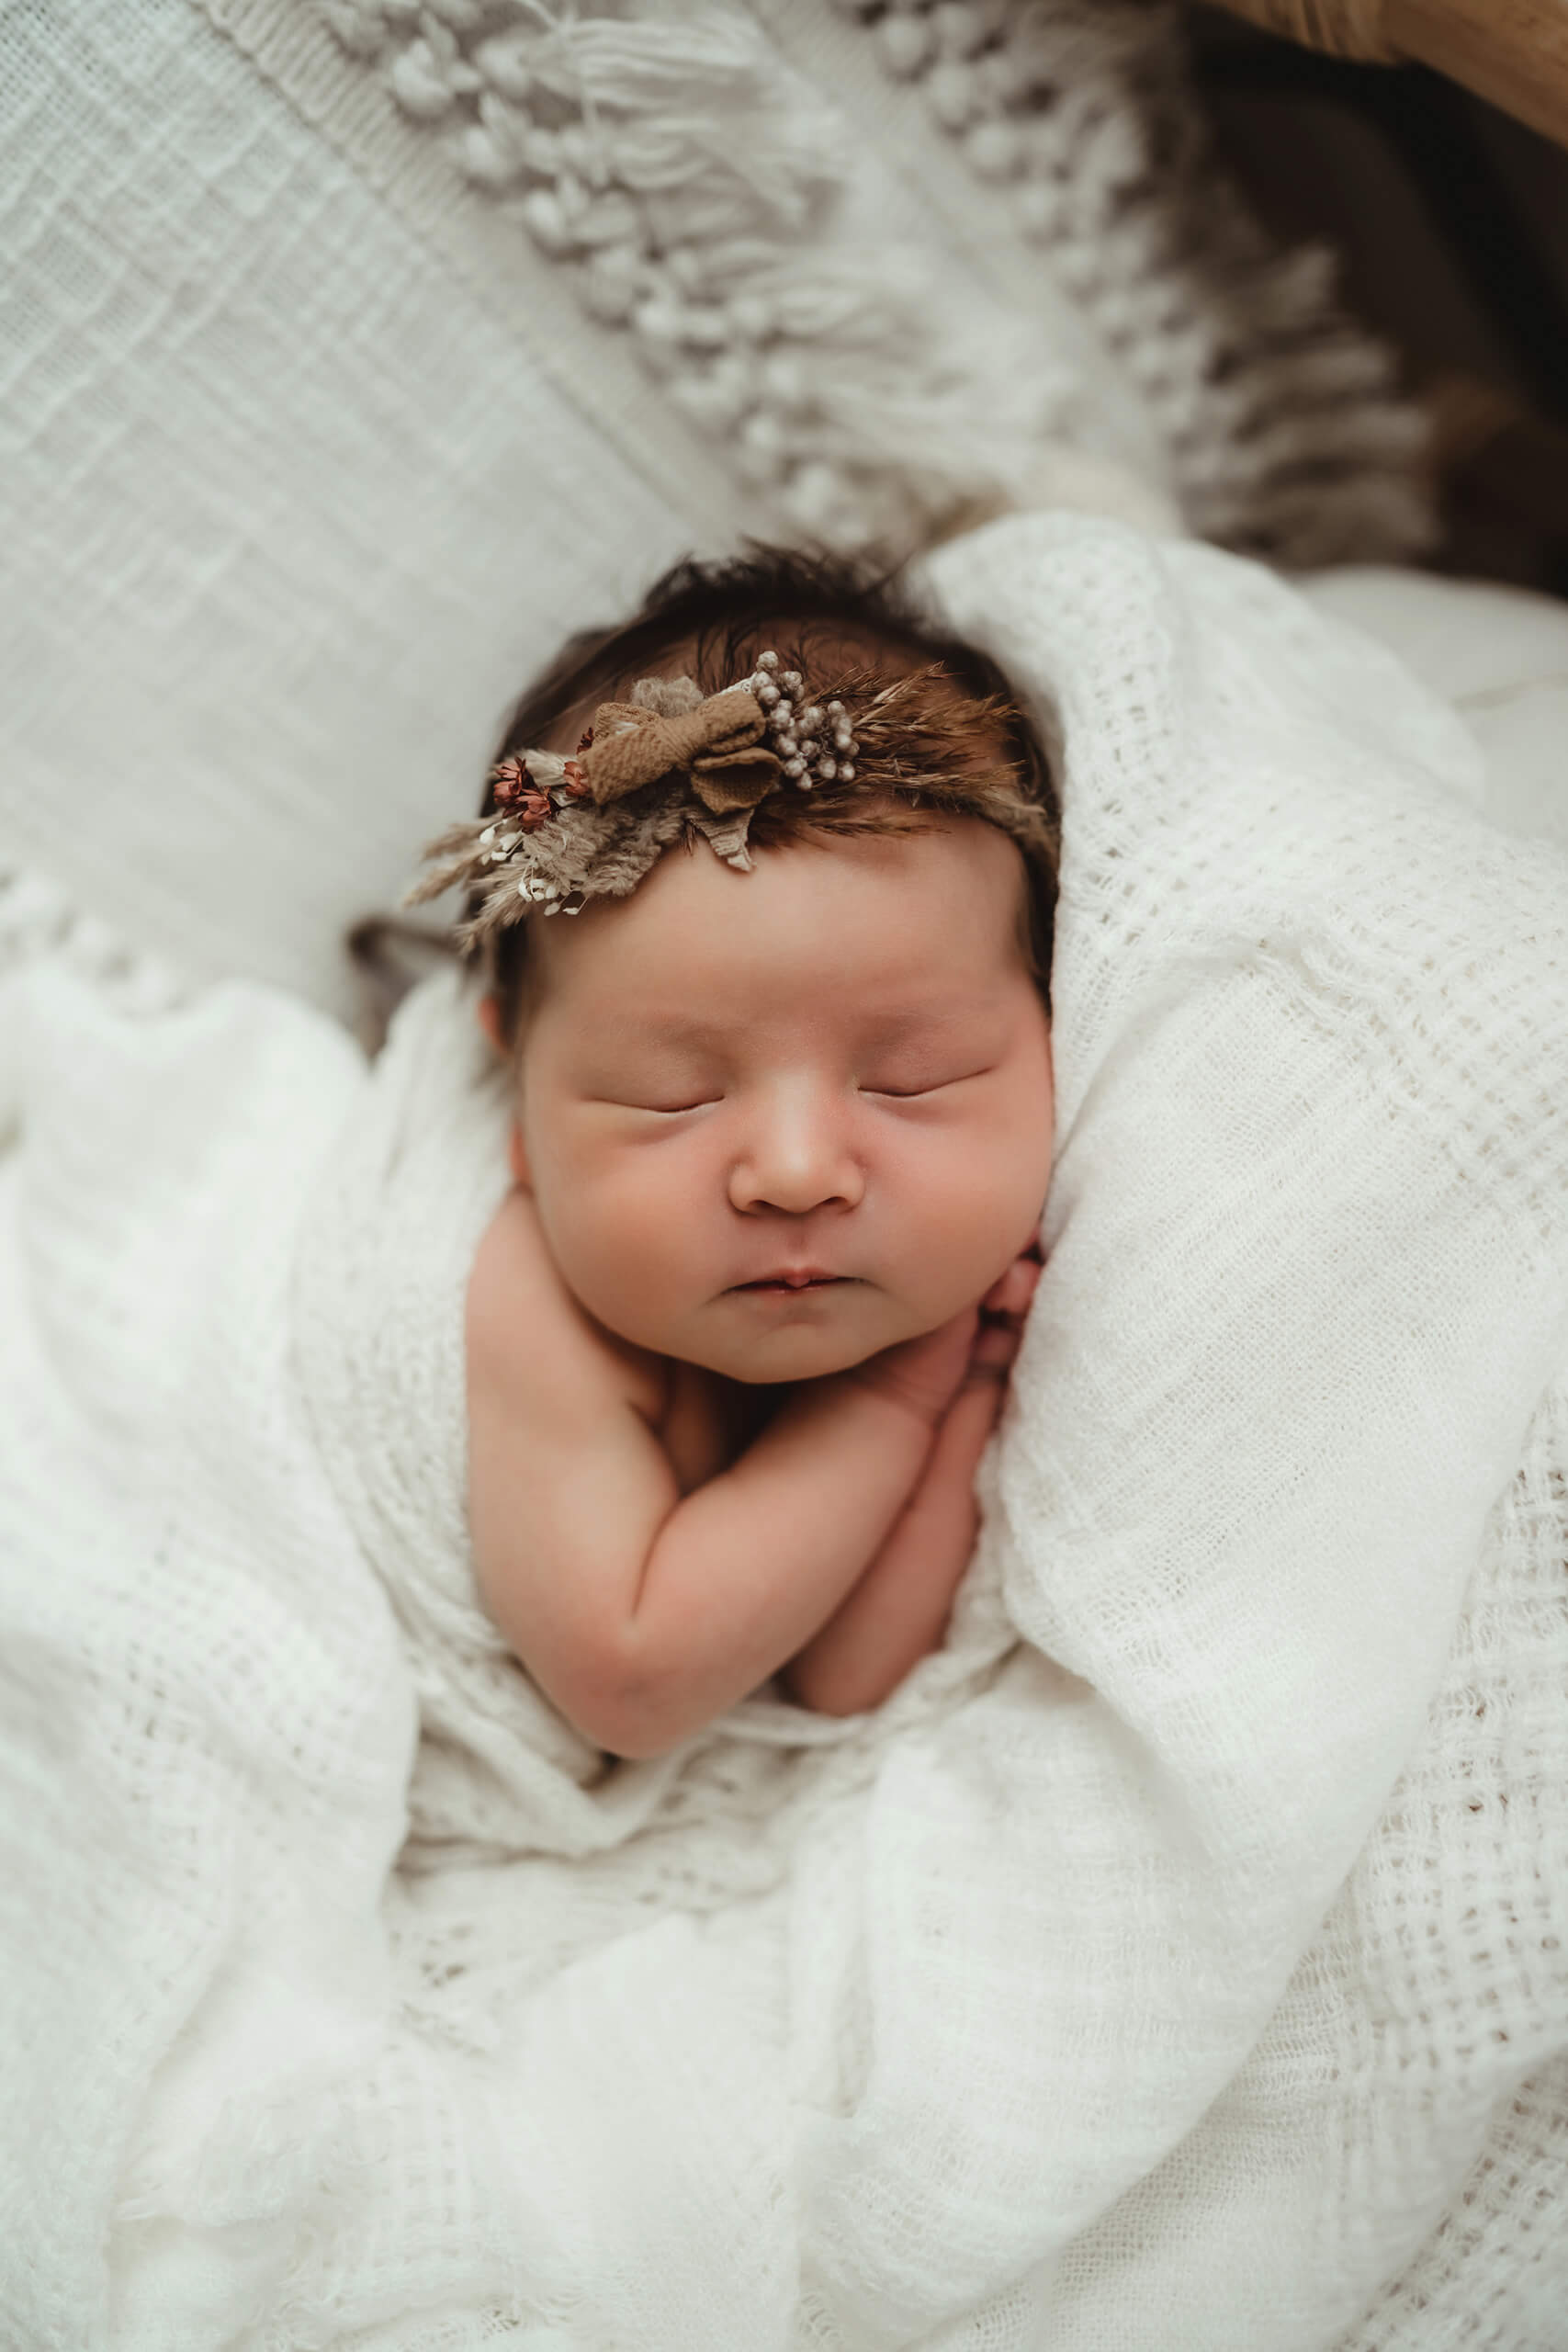 Newborn Photo Shoot Ideas And Types Of Newborn Photography 